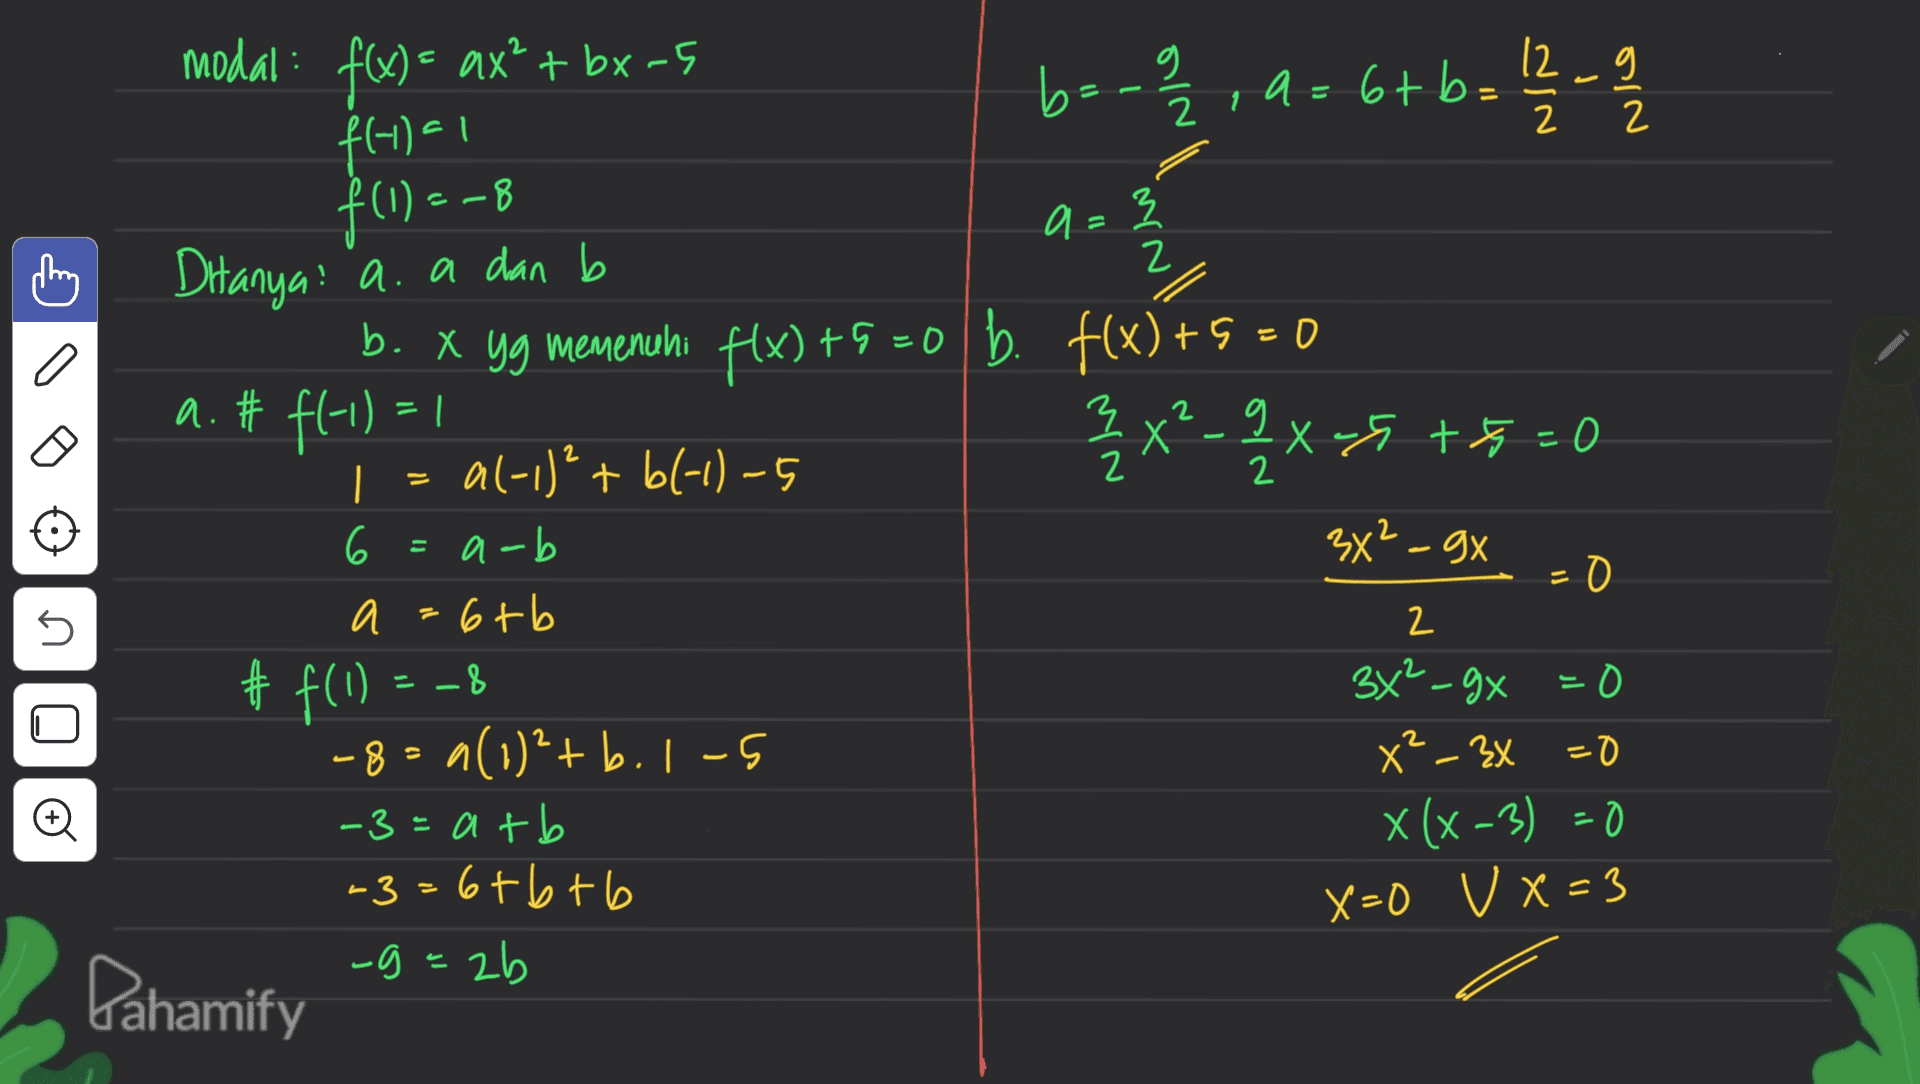 2 modal: f(x) = ax' + bx-5 b=-a/2 , a=6+b= 6 = 12 2 2 f14) 1 f(1) = -8 a = 3 in all 1 a a. # f(-1) = ! 2 = И 로 Ditanya: a. a dan b b. X yg memenuhi f(x) +9 =0 b. f(x) +9 = 0 3 2 x ² - 9 X -5 +8=0 X g X al-1)² + bl-1)-5 6 =a-b 3x²-gx = - 0 И a=6+b # f(1) 34²_gx = 0 -8=9(1)²+b. 1-5 x²-3x =0 -3= atb X (x-3) =0 -3=6+6+6 X-O V x = 3 -g=2b 45 2 -8 - © Pahamify 